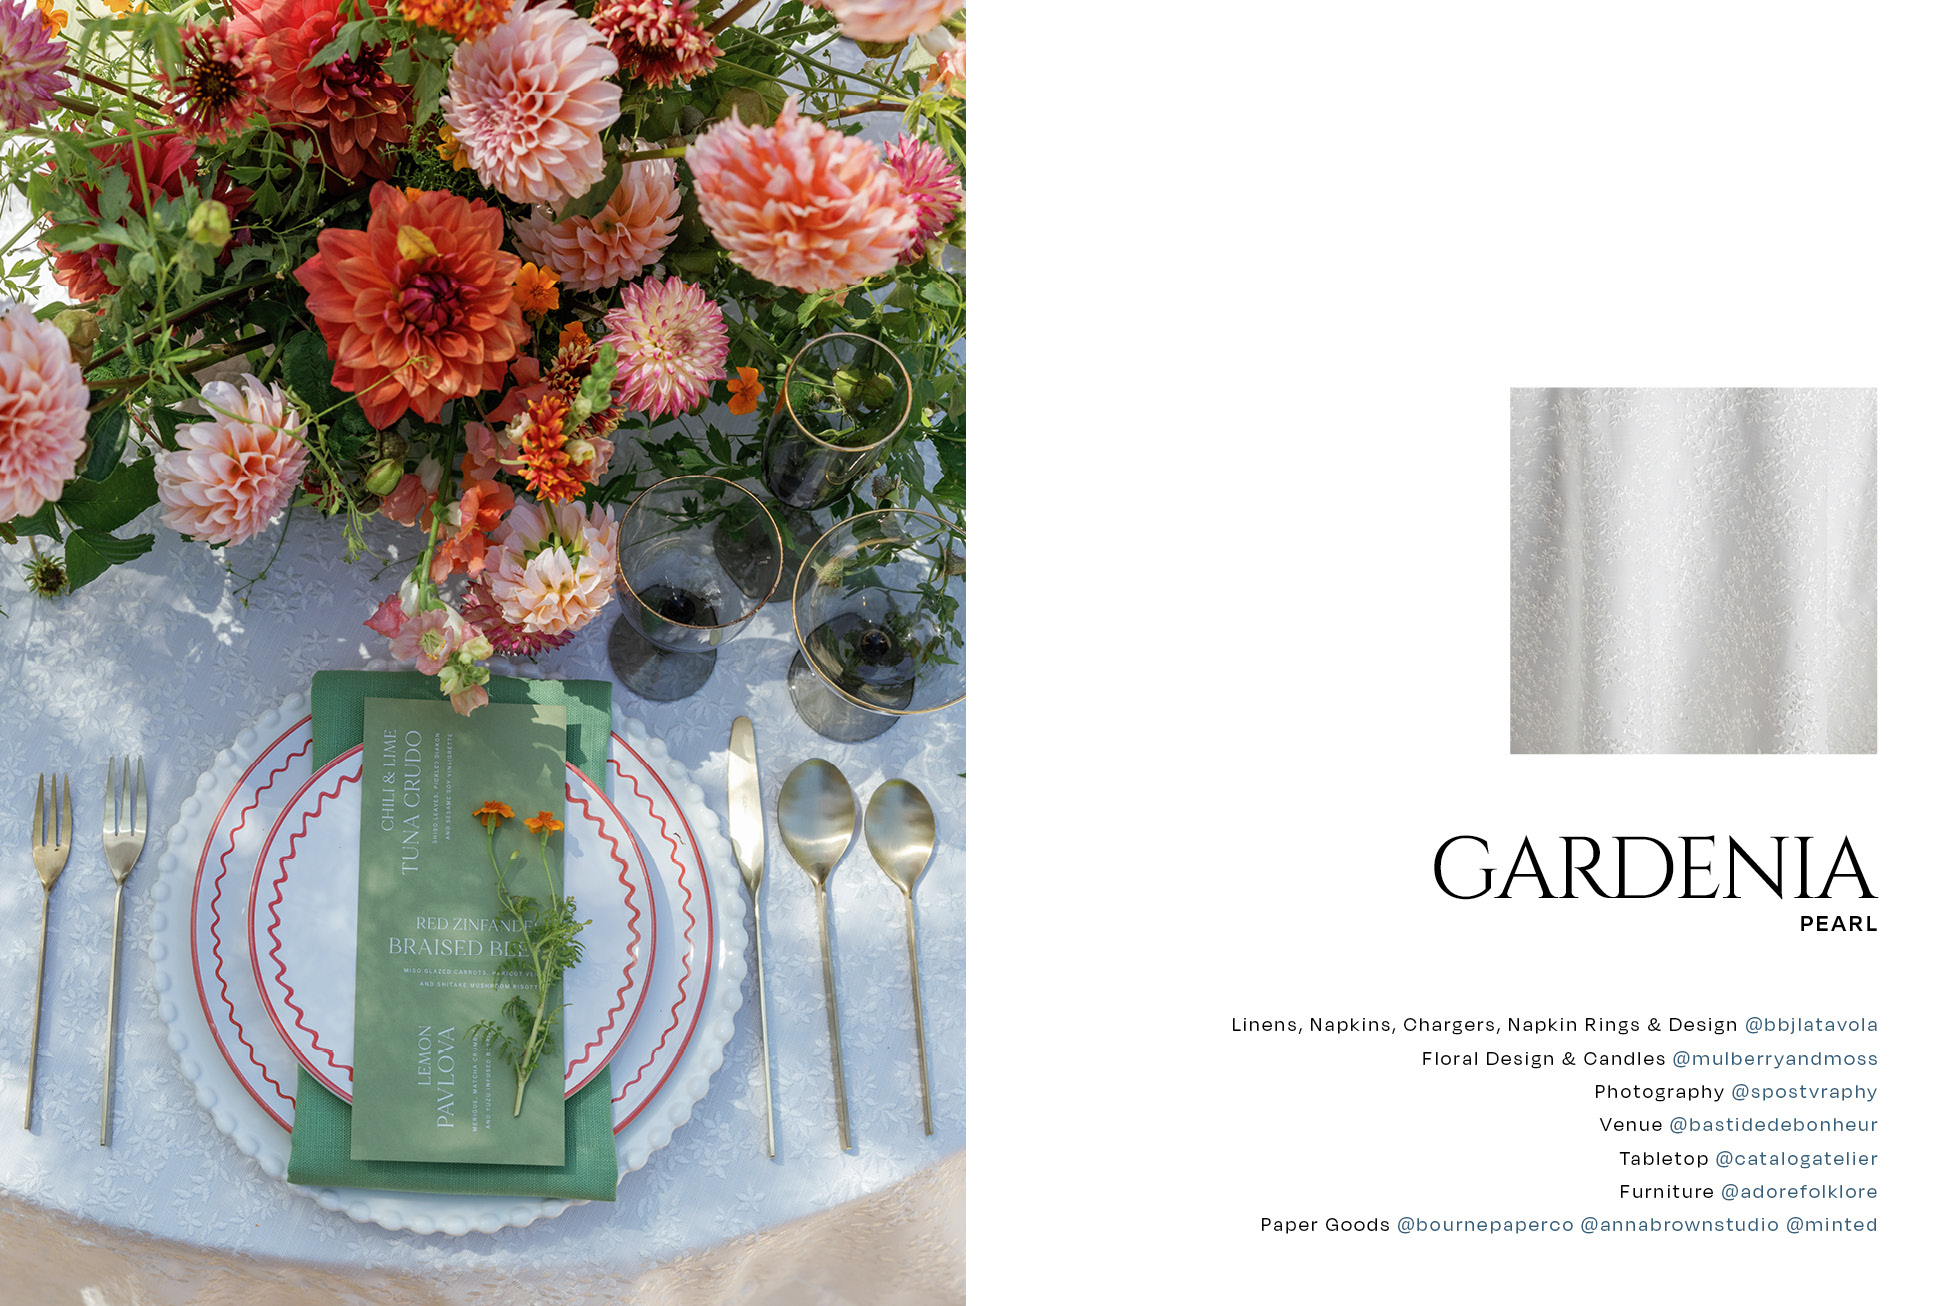 Porcelain Collection - Gardenia Pearl